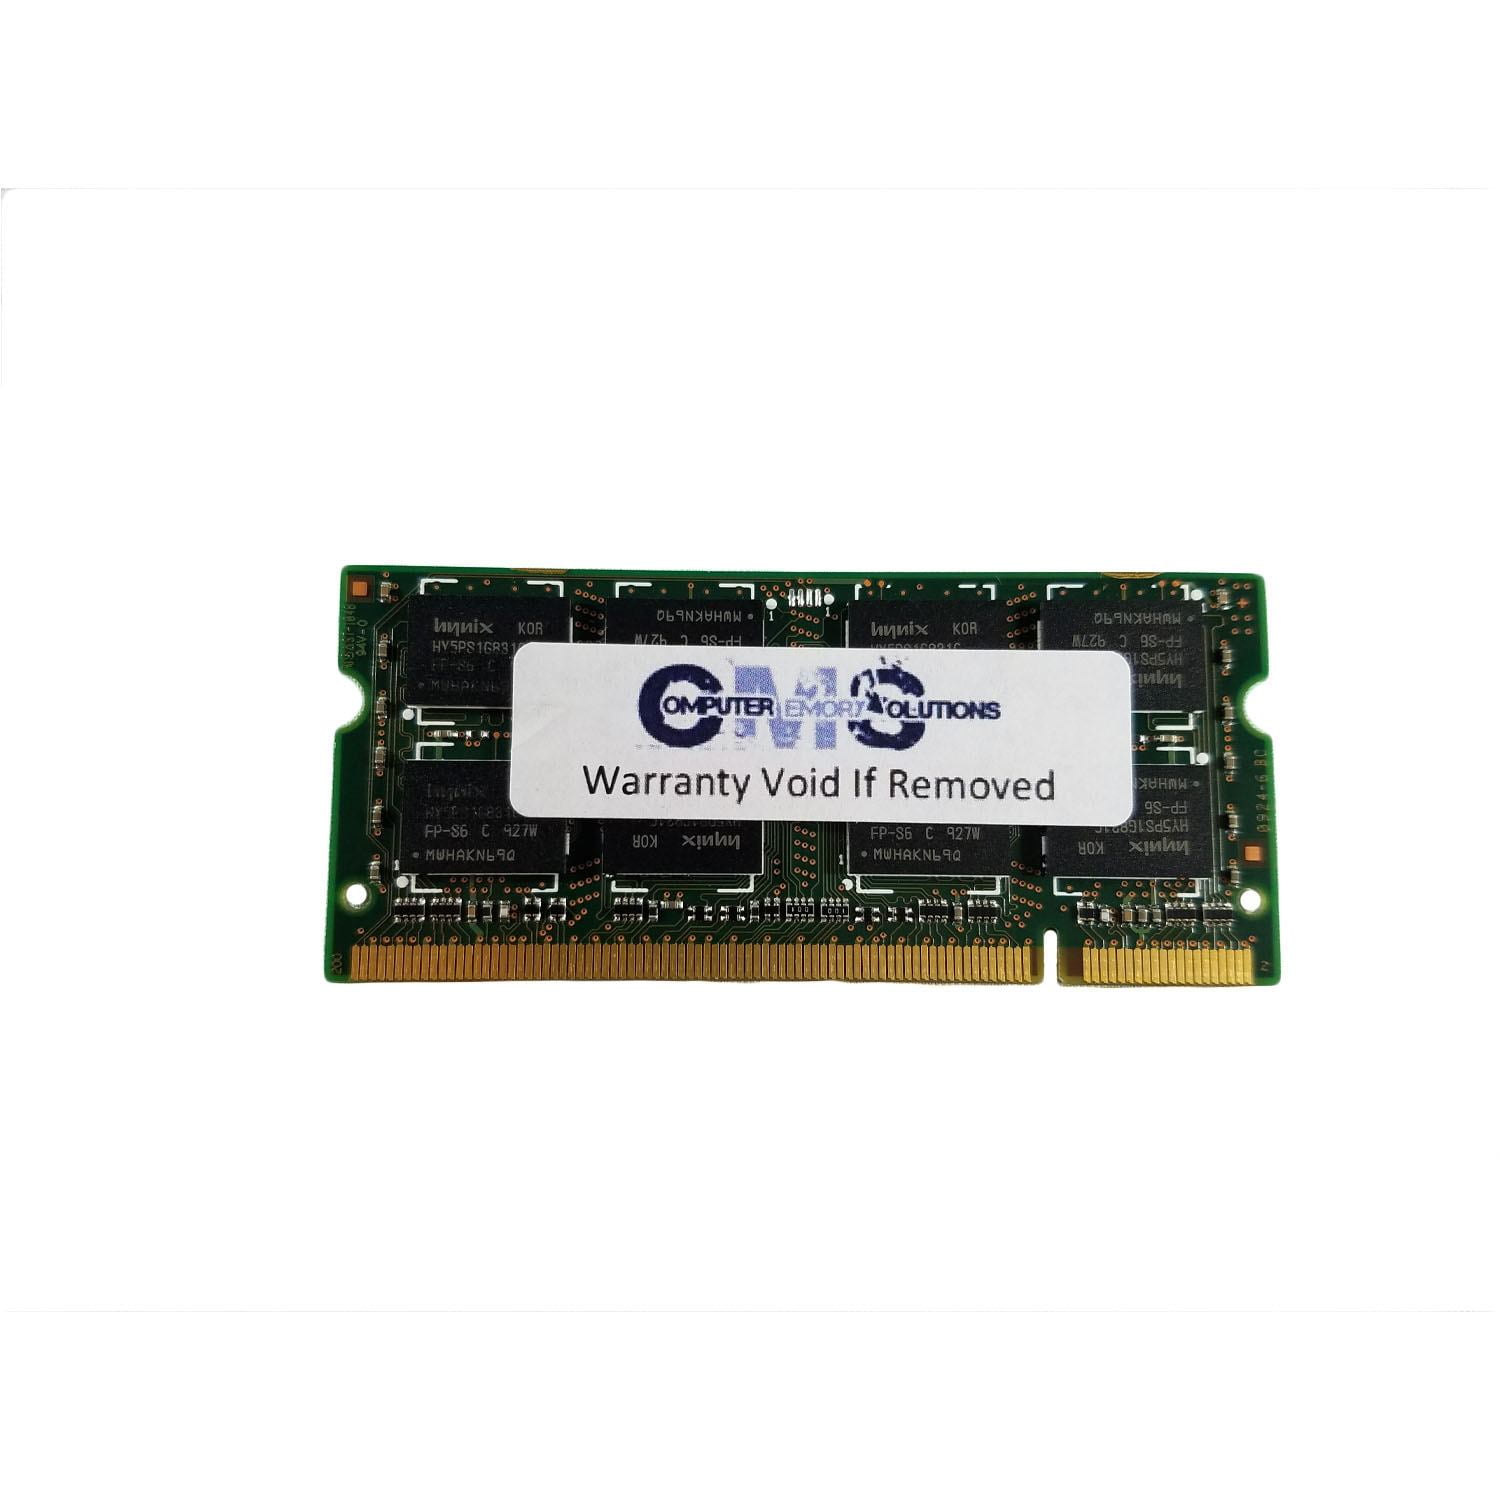 8705DJU 1GB DDR2-533 RAM Memory Upgrade for The IBM ThinkCentre A Series A55 PC2-4200